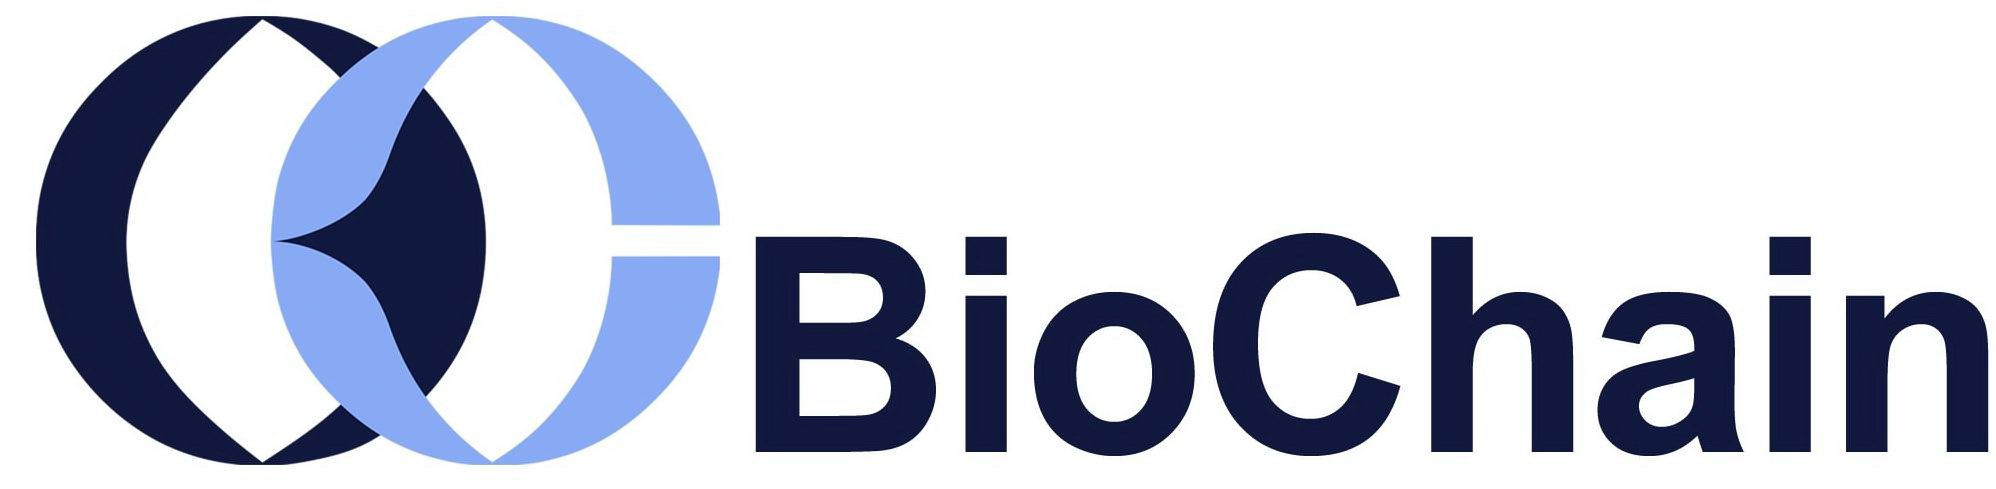 Trademark Logo BIOCHAIN